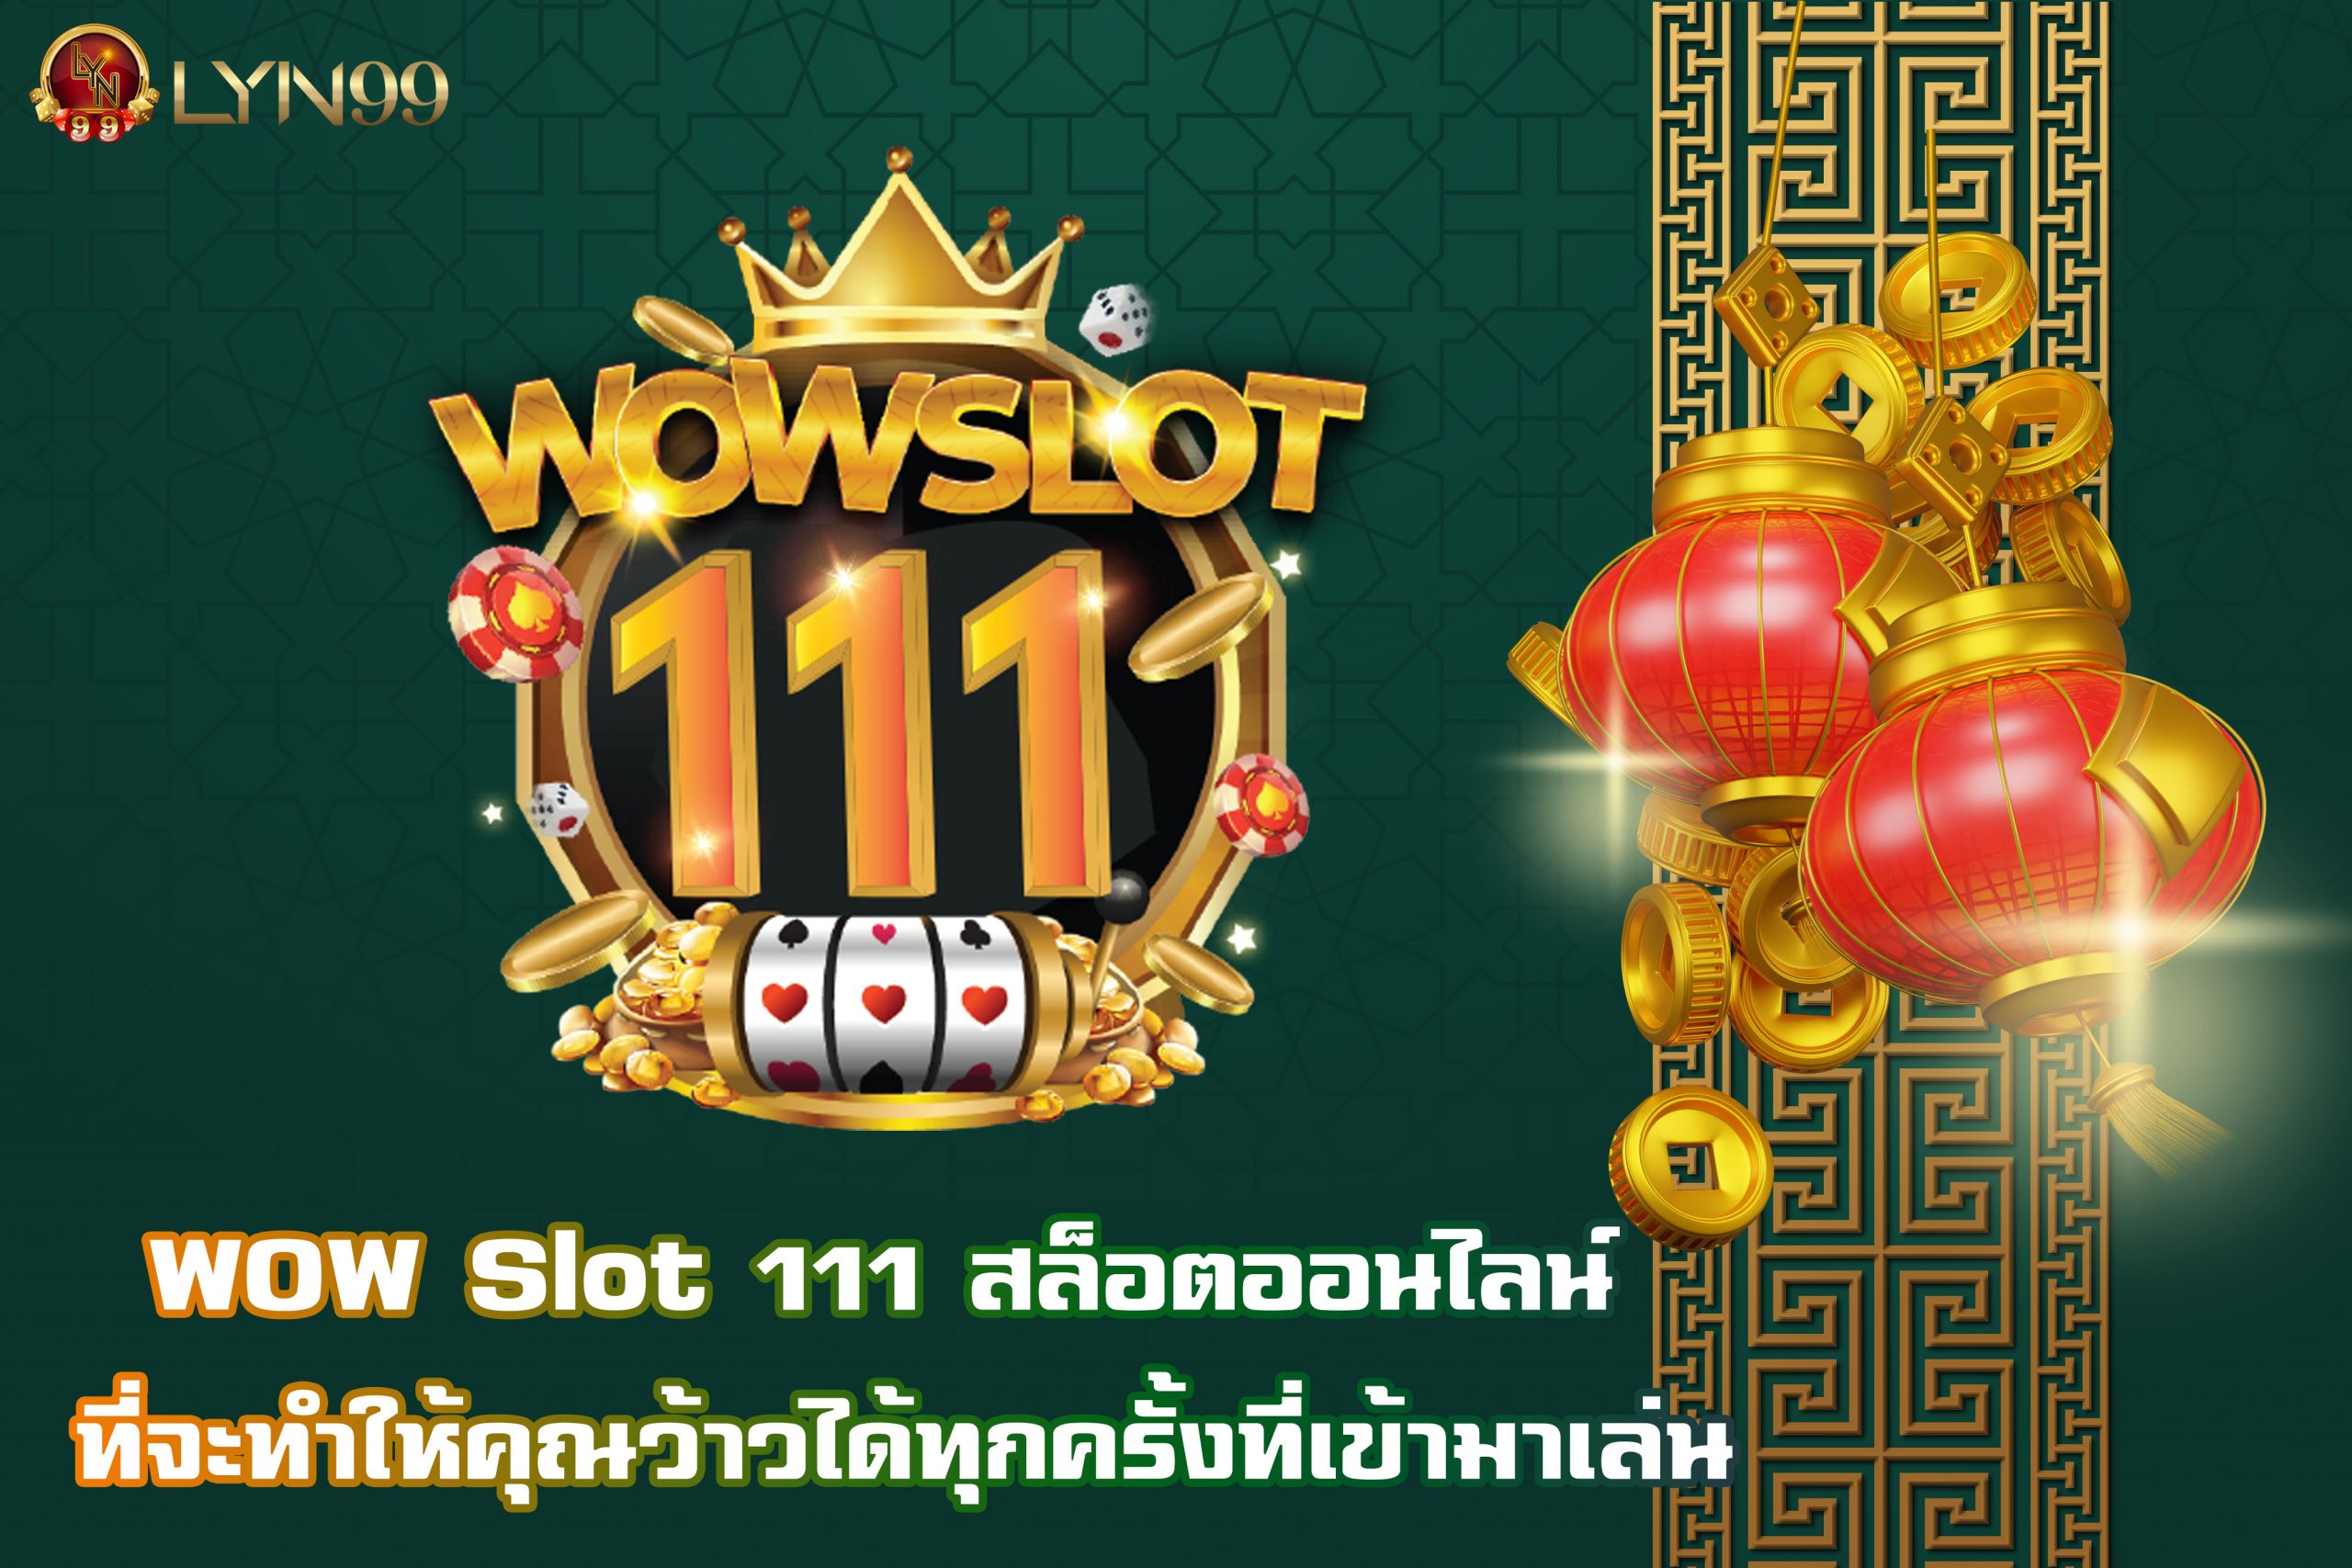 WOW Slot 111 สล็อตออนไลน์ ที่จะทำให้คุณว้าวได้ทุกครั้งที่เข้ามาเล่น